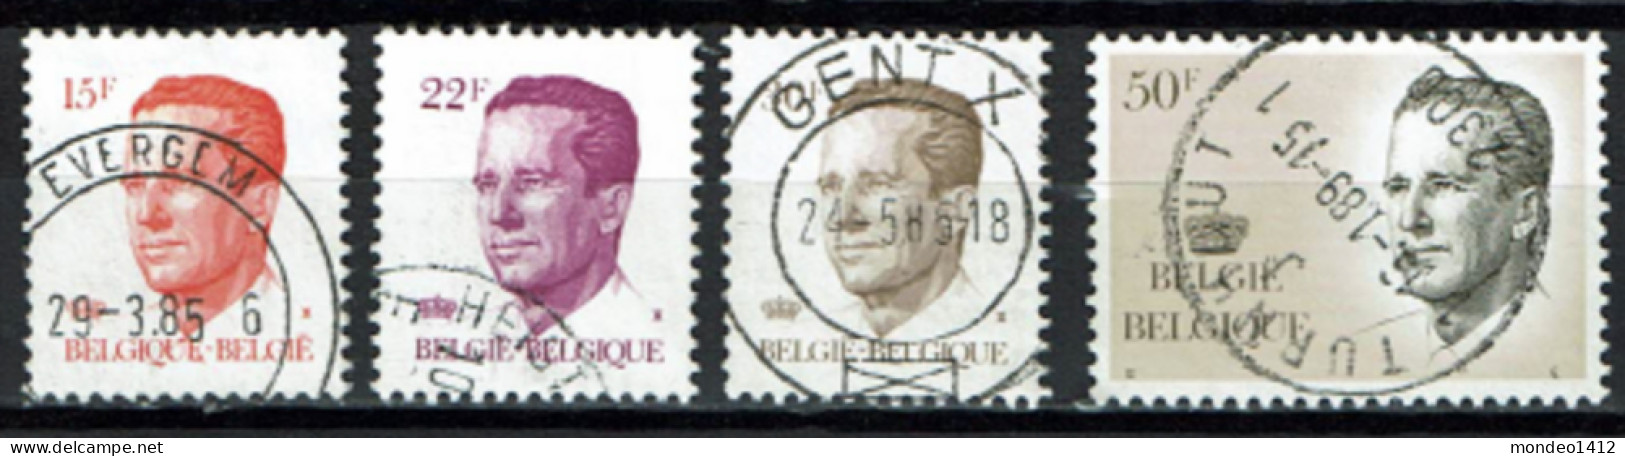 België 1984 OBP 2124/2127 - Série Courante Baudouin "Velghe" - Used Stamps